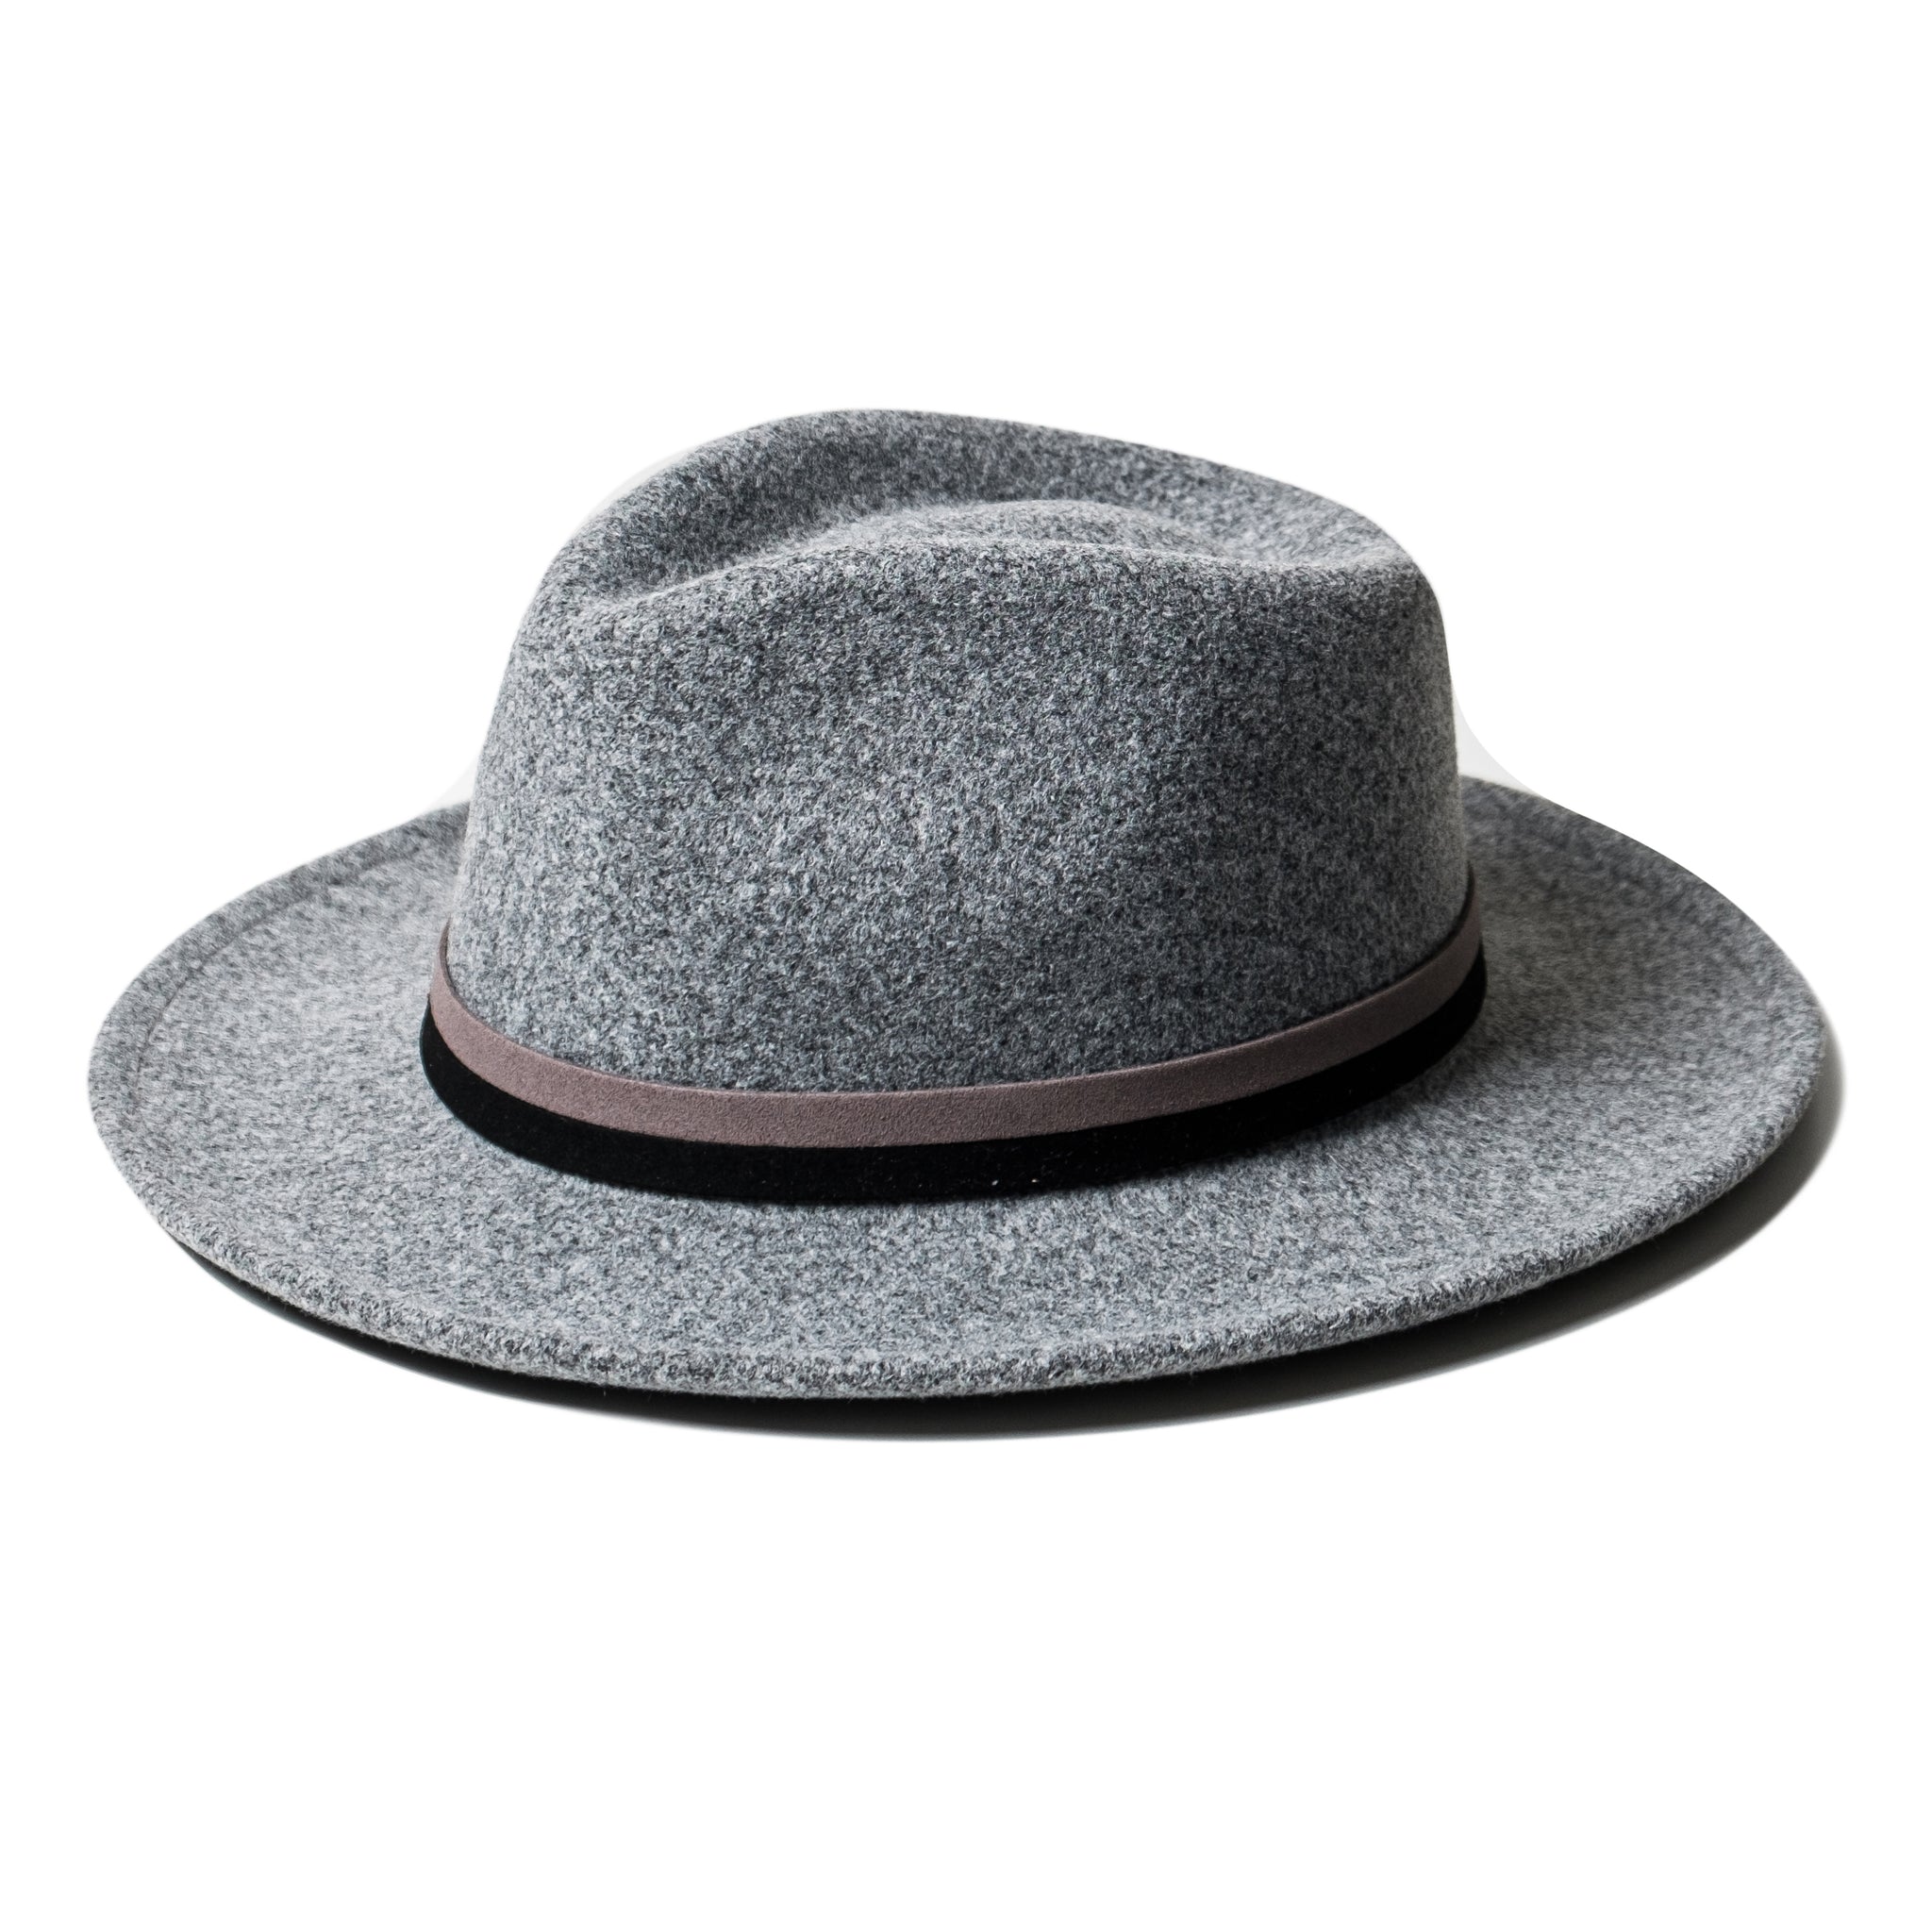 Chokore Vintage Fedora Hat (Light Gray)